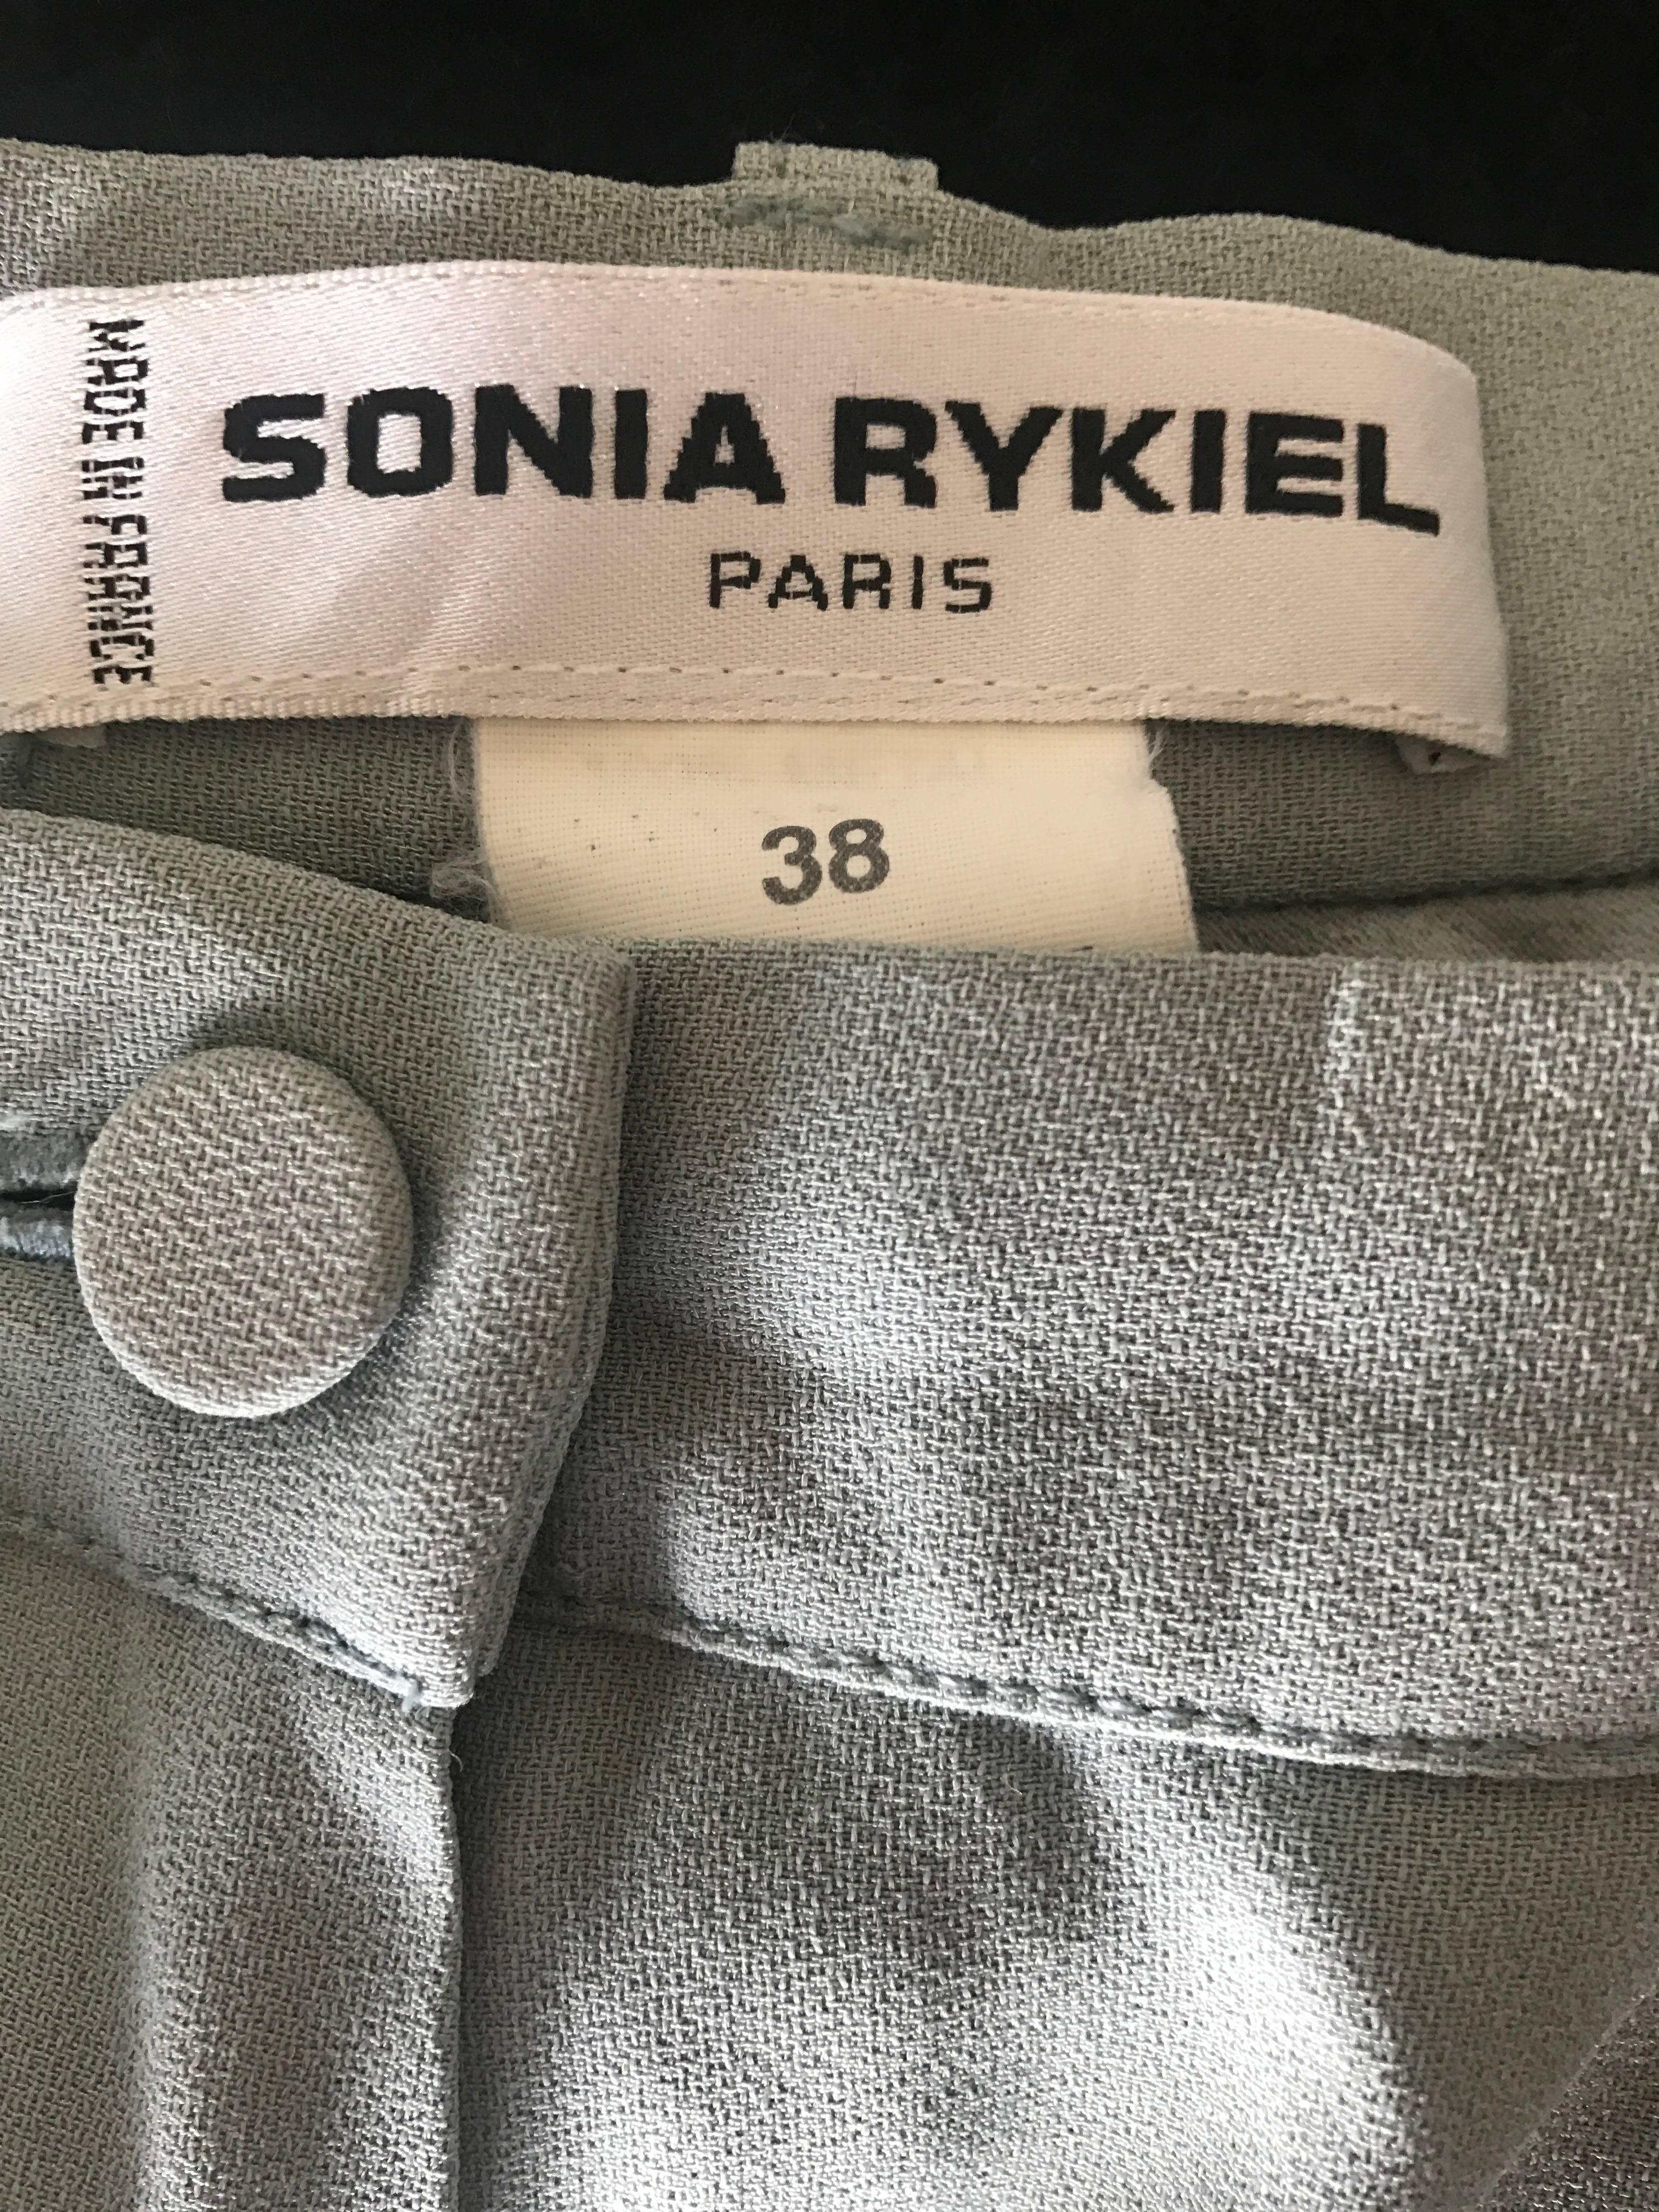 Vintage Sonia Rykiel 1990s Pale Blue Silver Beaded High Waisted Slim Pants Sz 38 For Sale 3